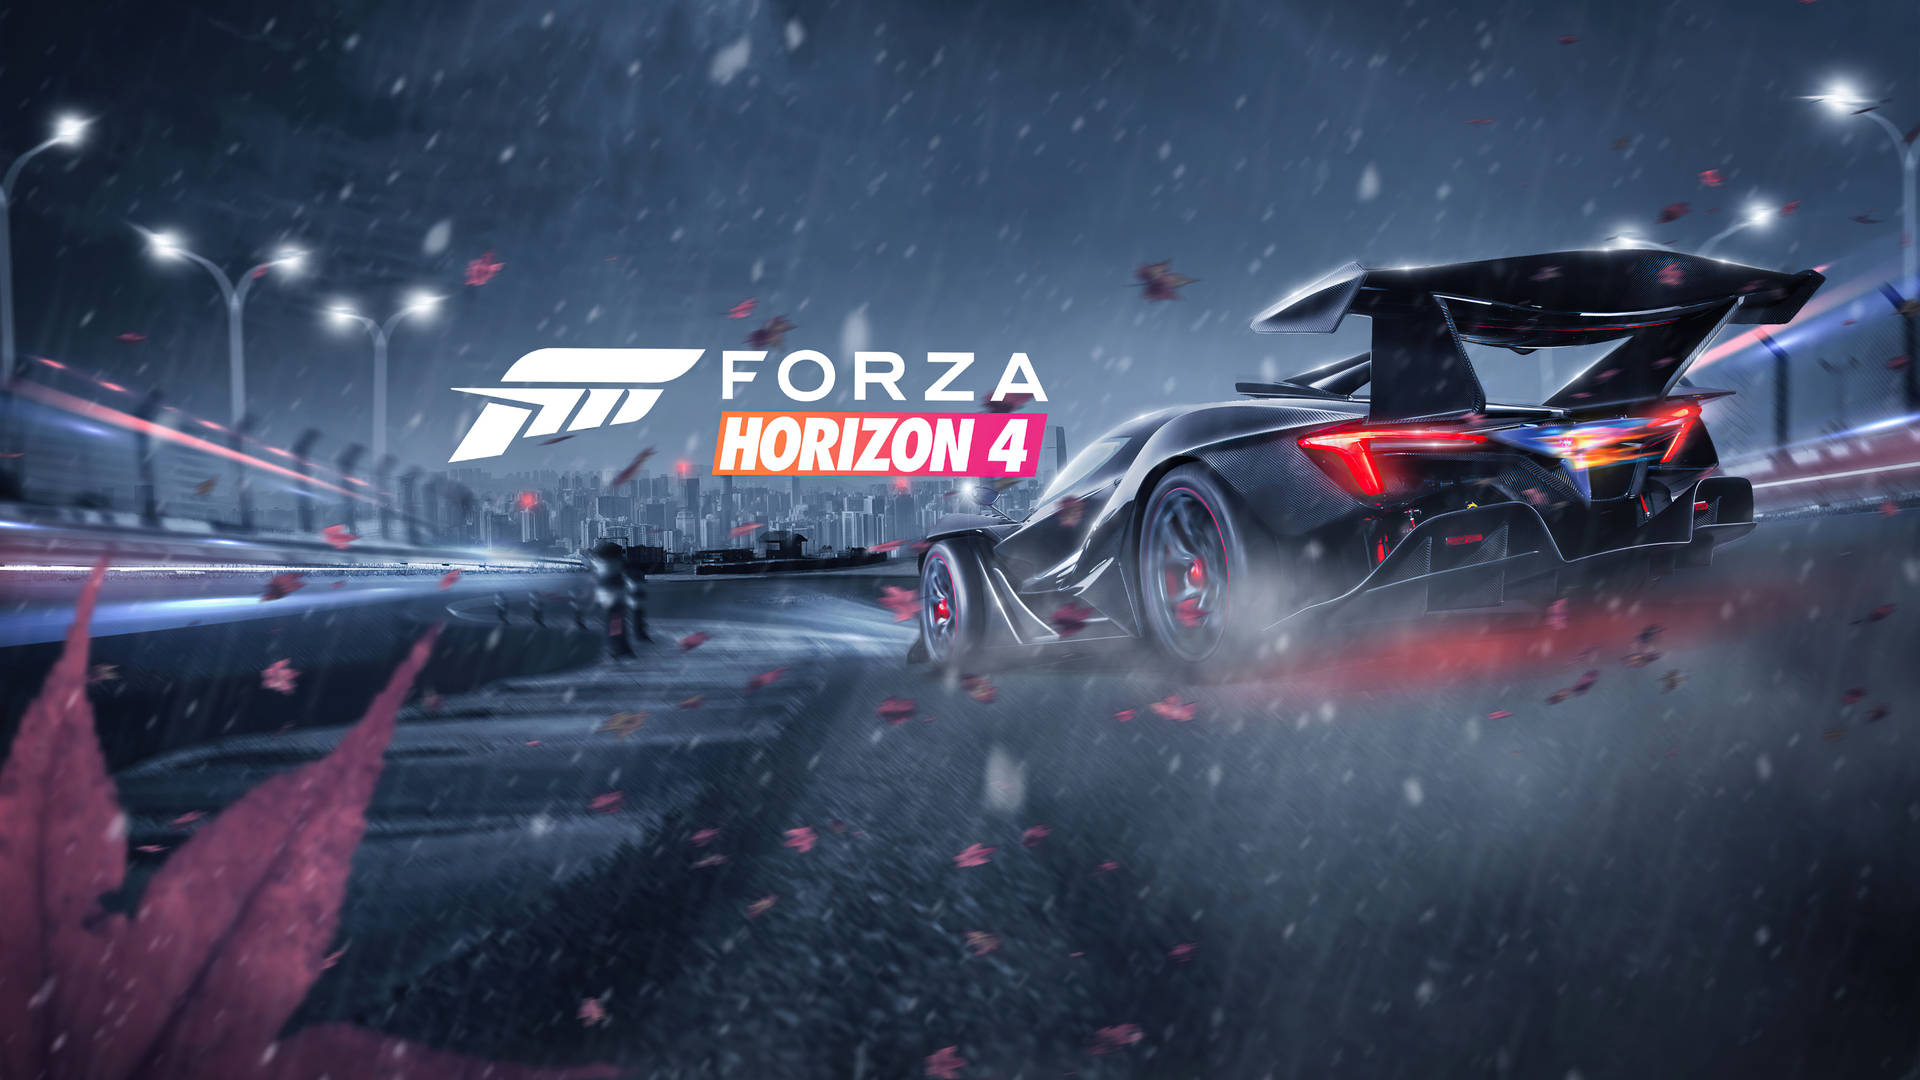 Imágenes Forza Horizon 4 4k